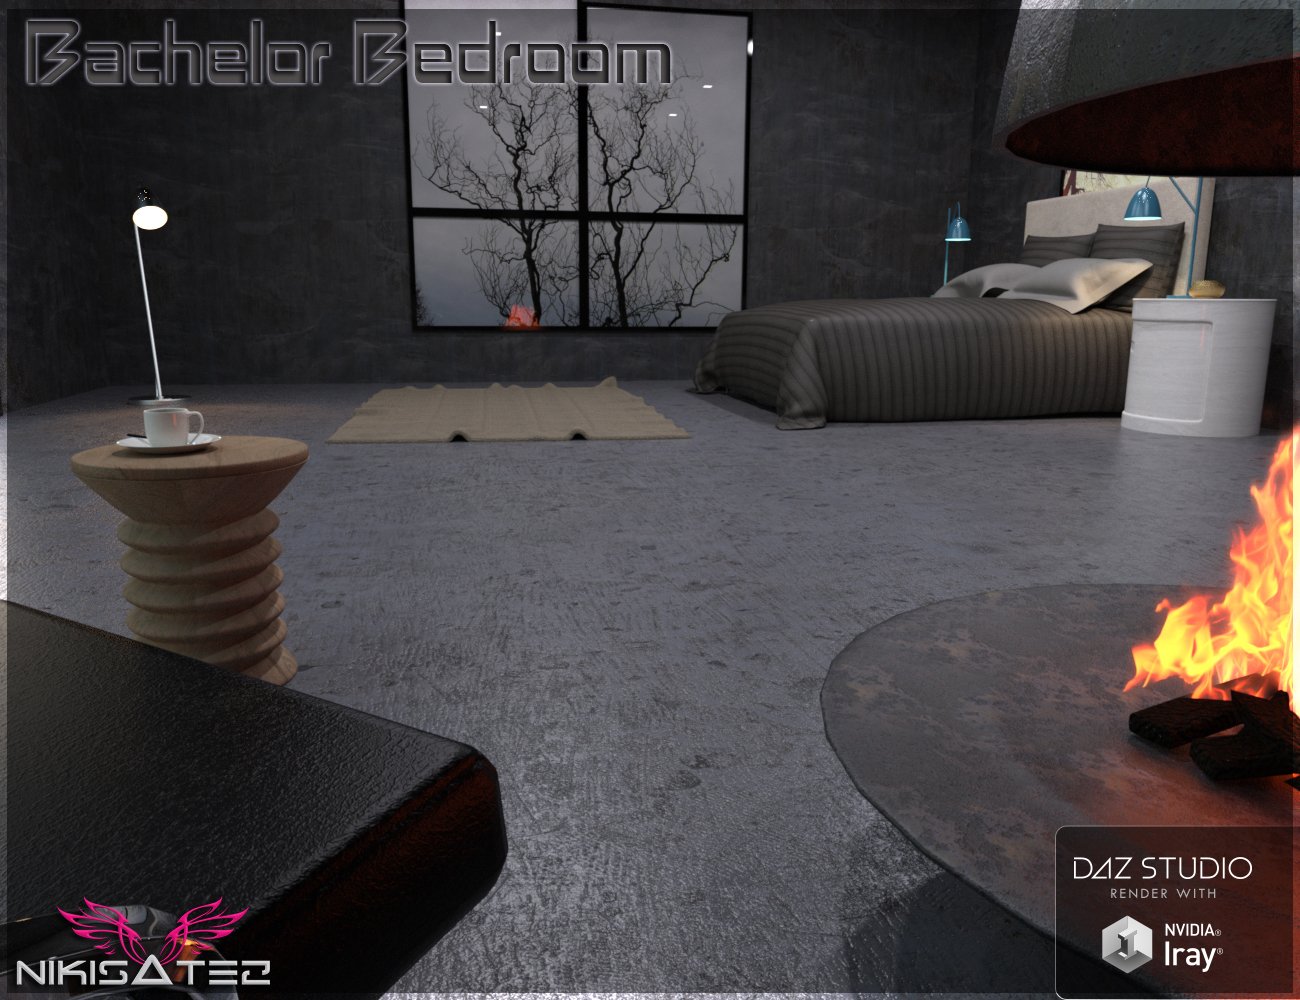 Bachelor Bedroom by: Nikisatez, 3D Models by Daz 3D